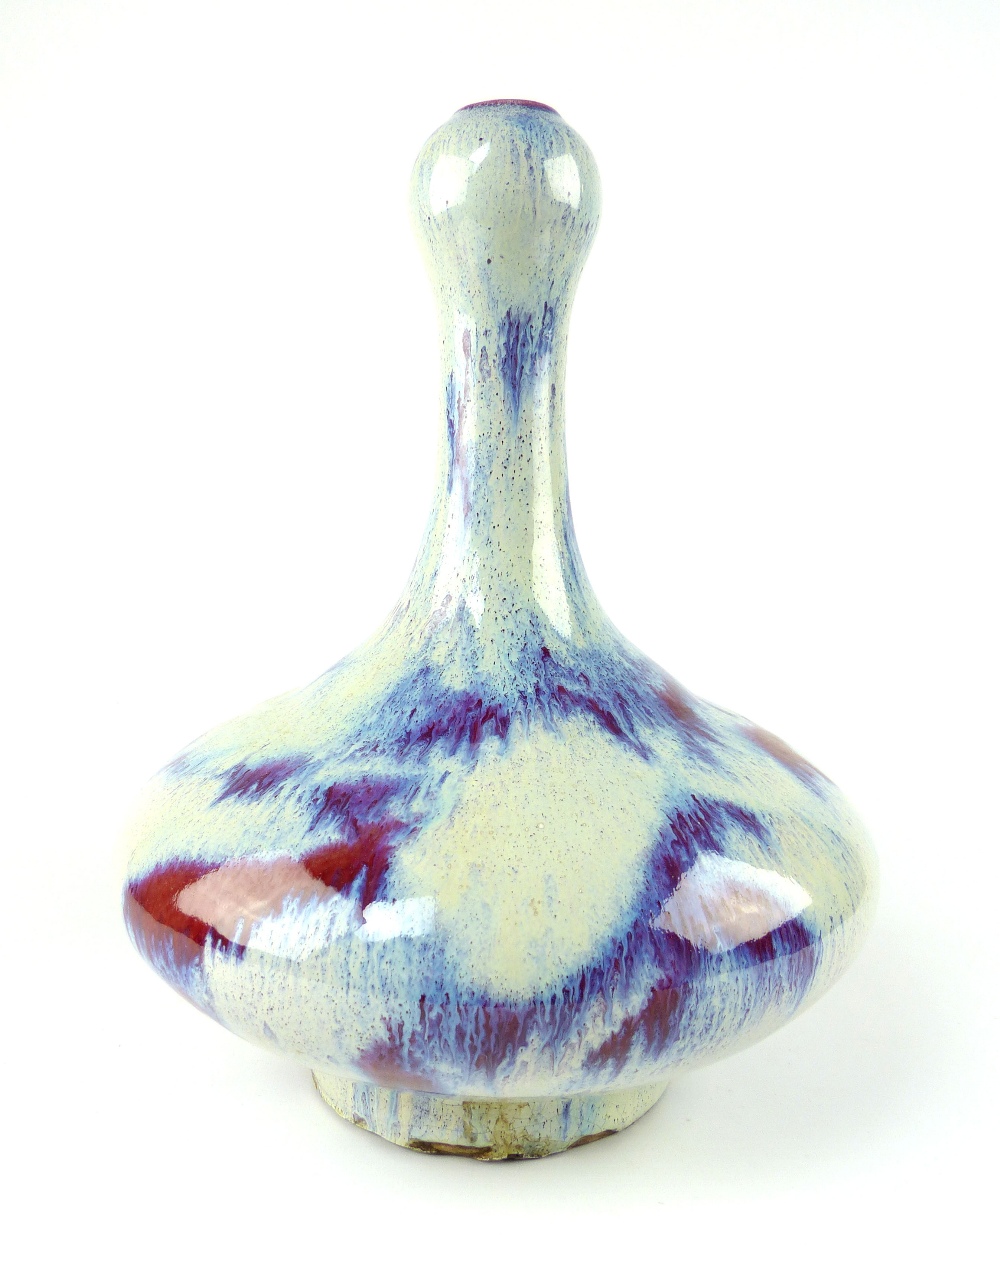 Chinese Jun ware garlic neck vase with streaked glazed baluster body 28 cm H - Image 2 of 3